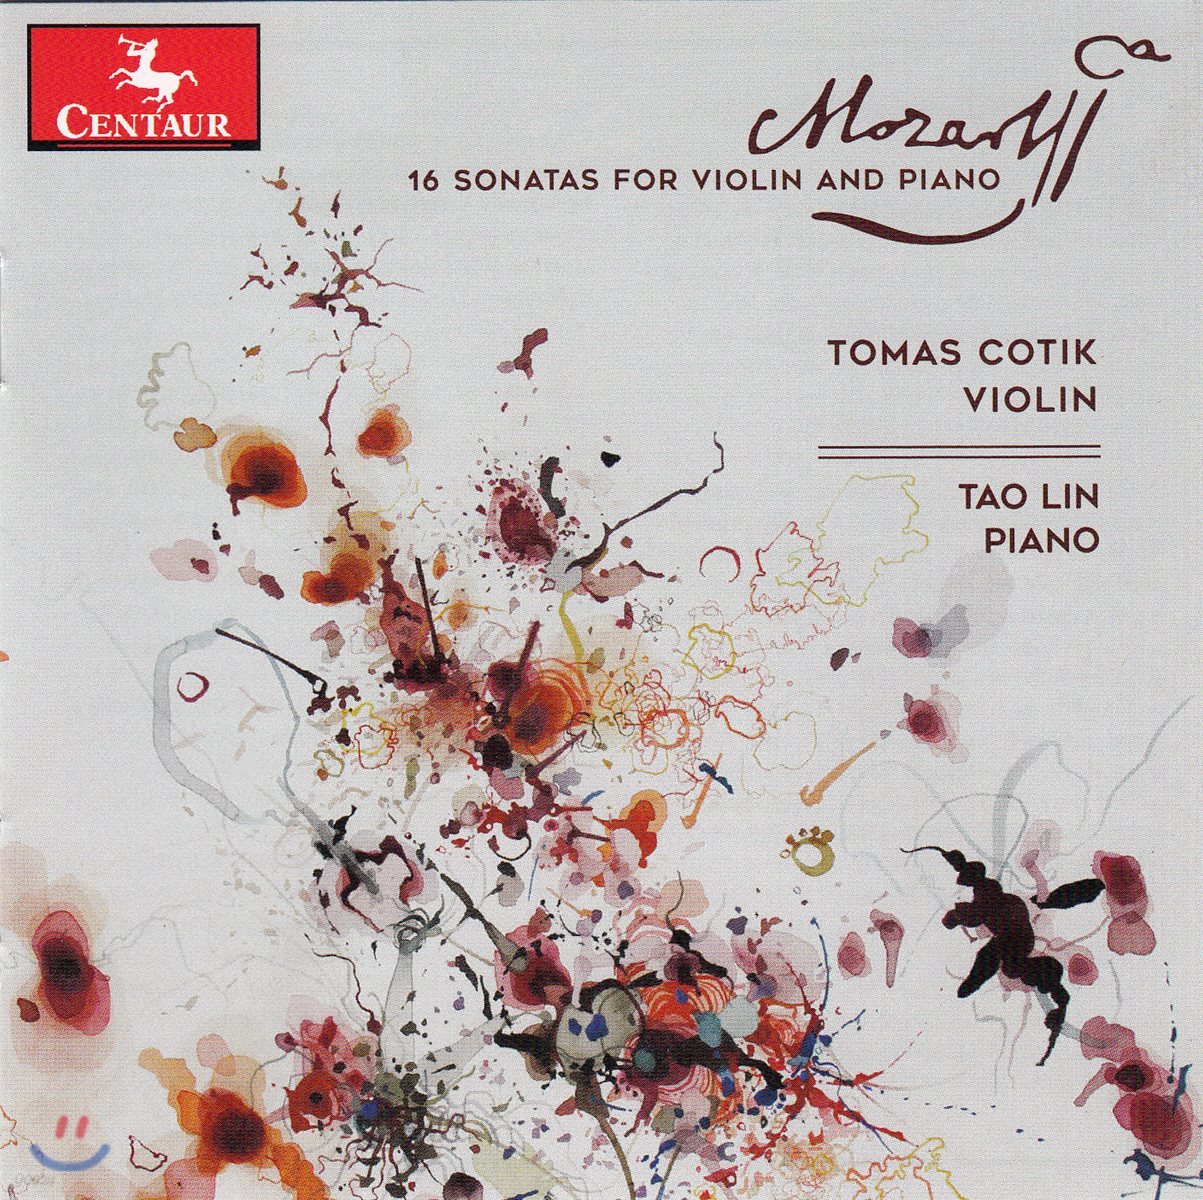 Tomas Cotik / Tao Lin 모차르트: 바이올린 소나타 전곡 (Mozart: 16 Sonatas for Violin and Piano) 